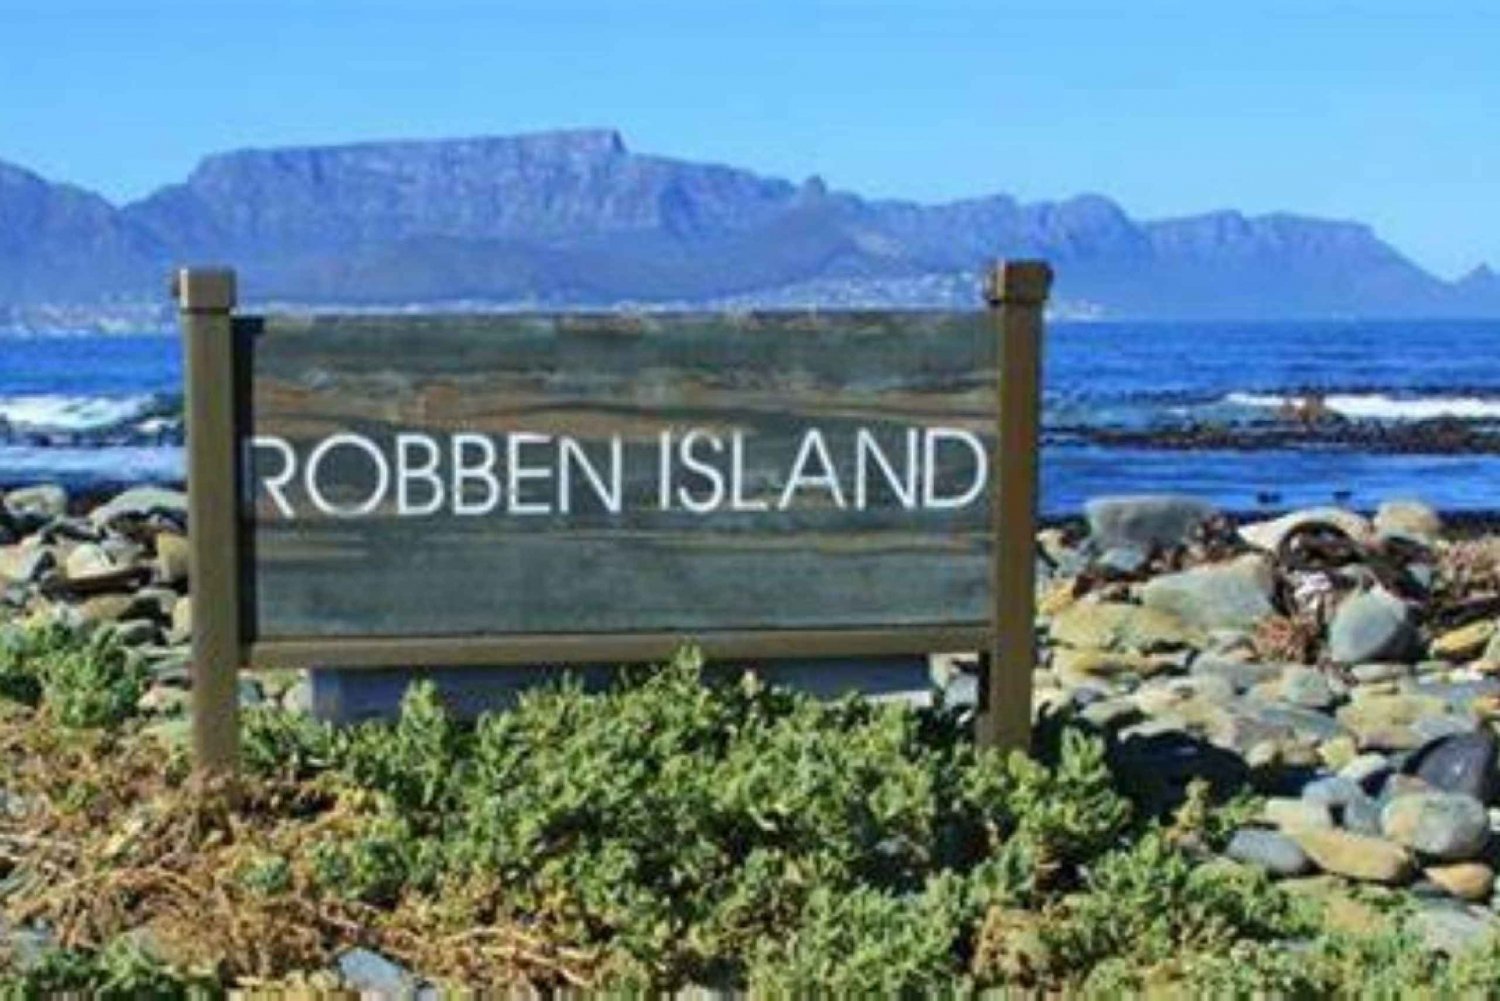 Full Day Township & Robben Island Heritage Tour